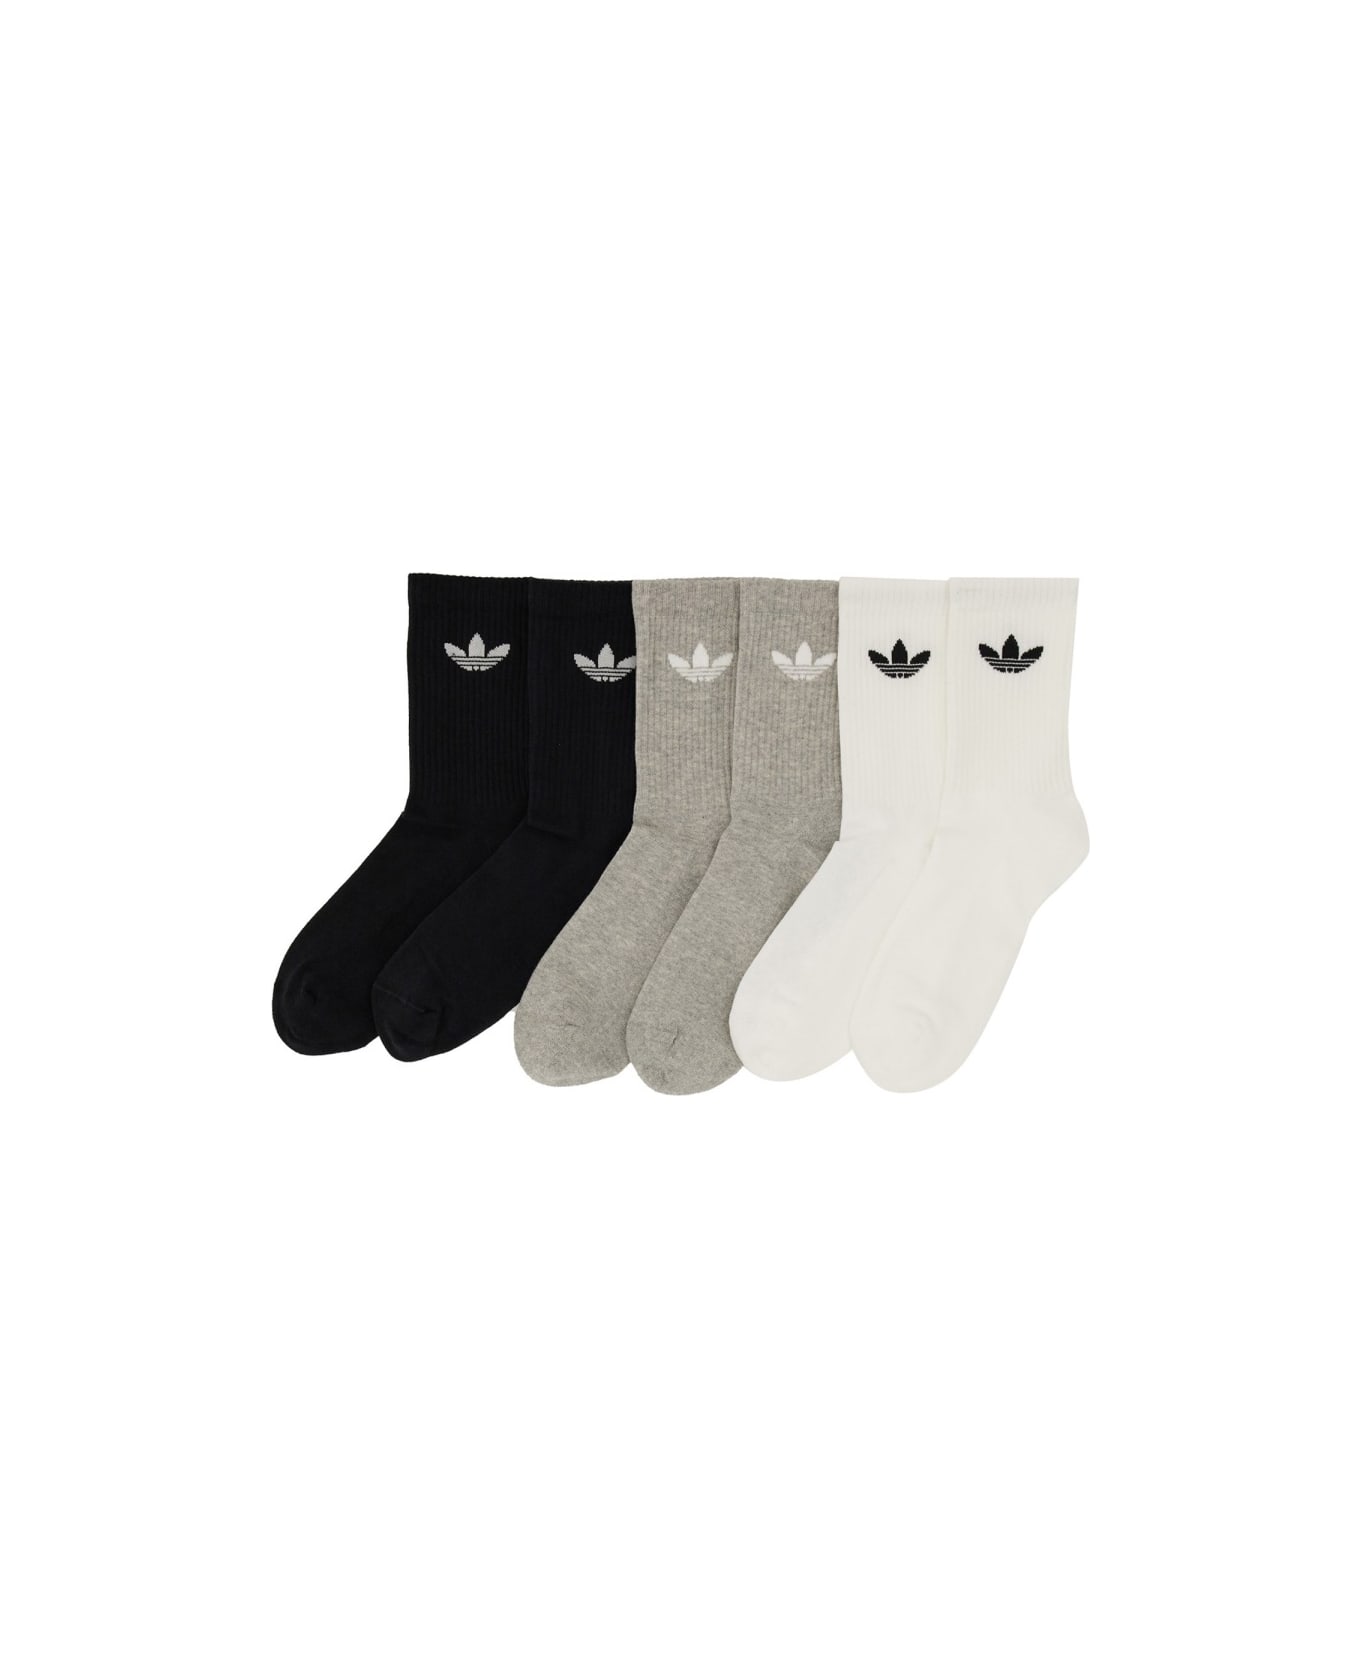 Adidas Originals Trefoil Cushion Crew Socks - MULTICOLOUR 靴下